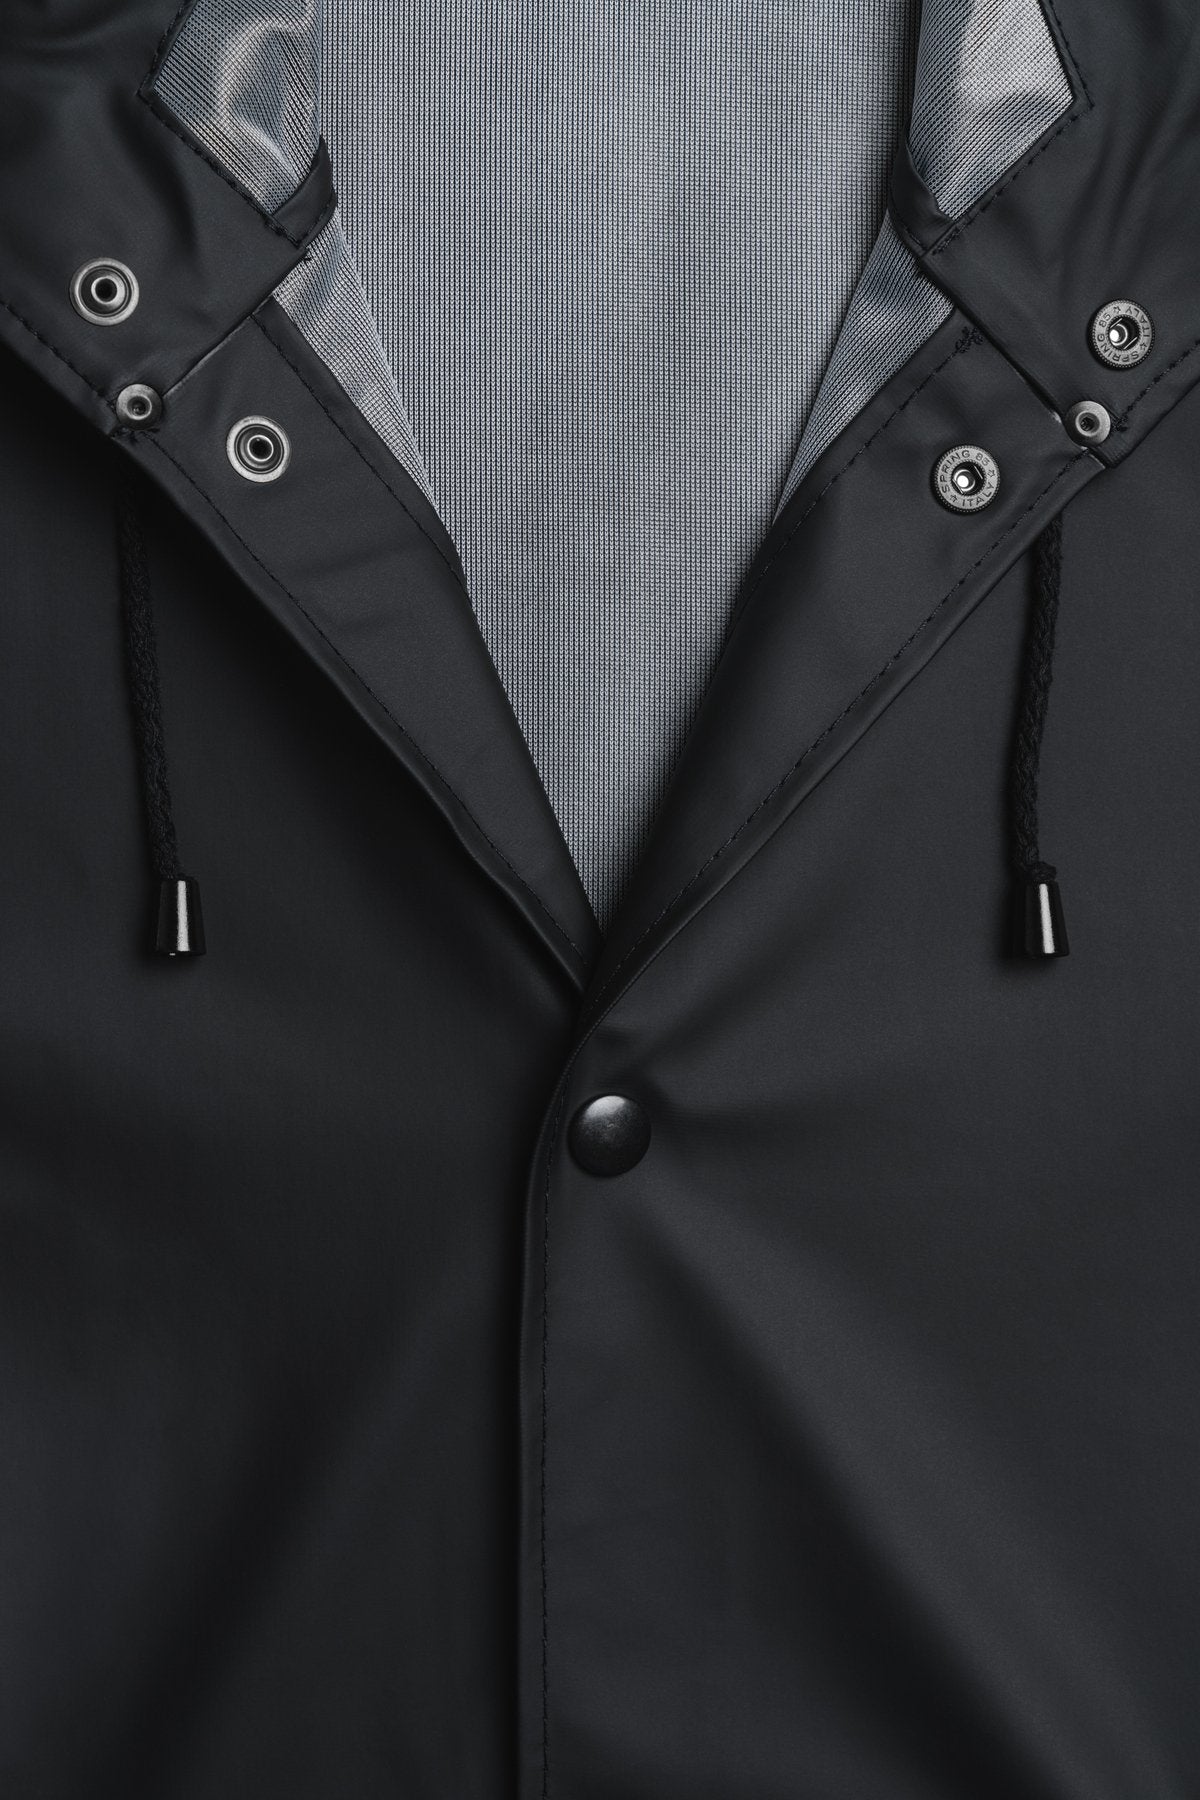 Stockholm Lightweight Raincoat
Black